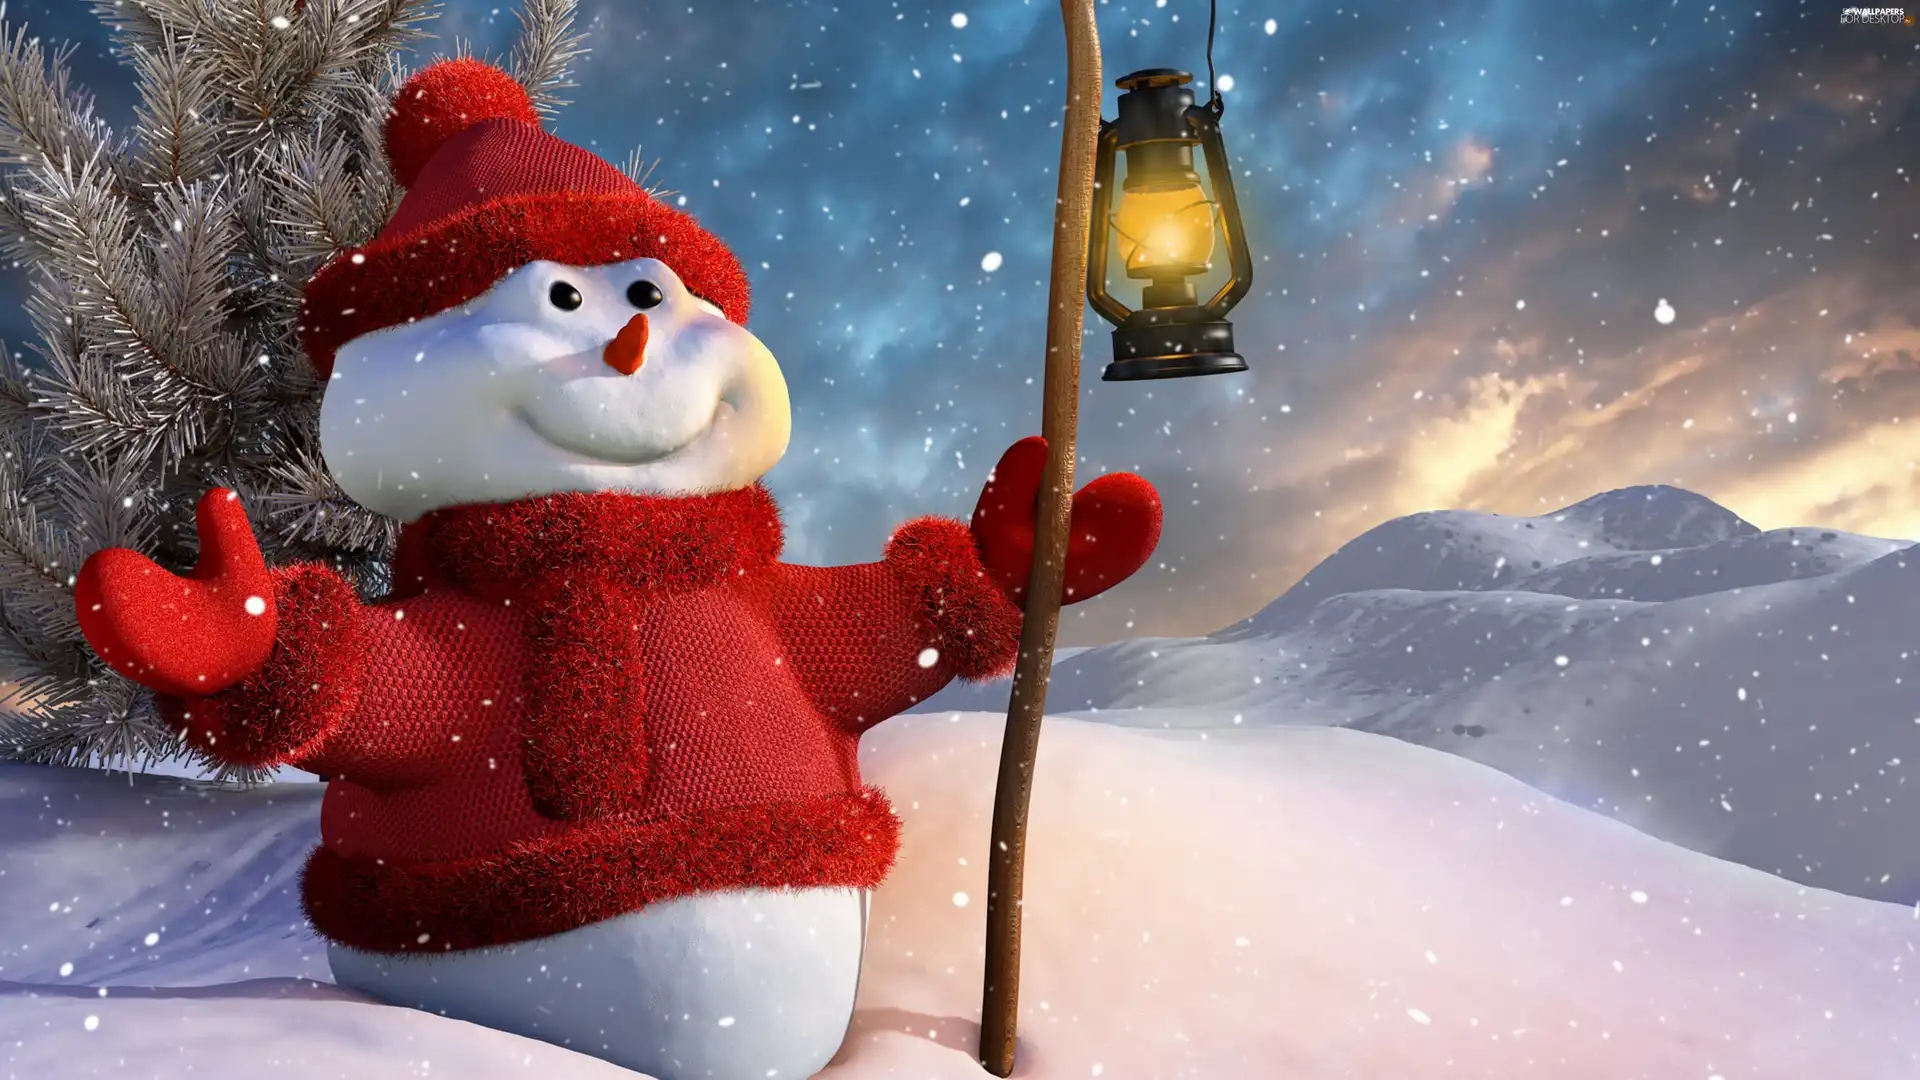 Lamp, snow, clothes, lantern, Snowman